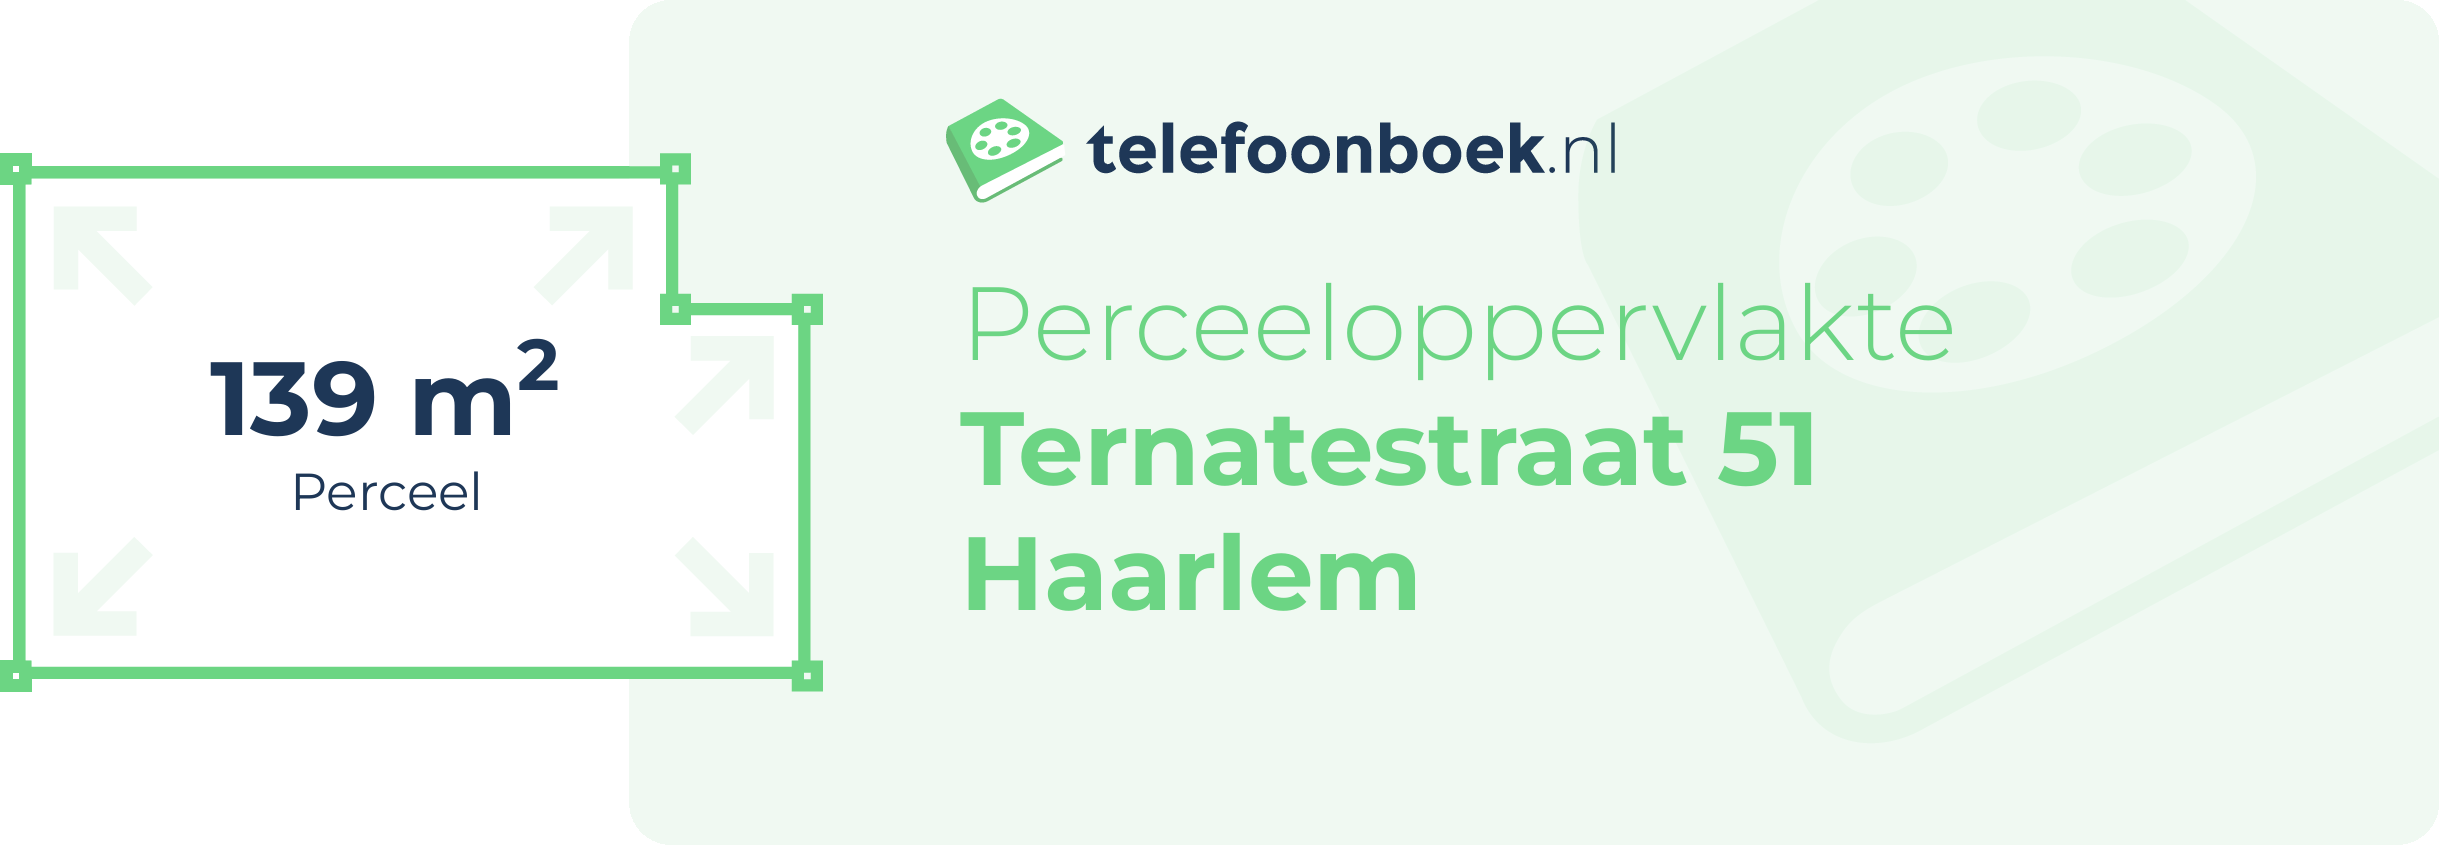 Perceeloppervlakte Ternatestraat 51 Haarlem